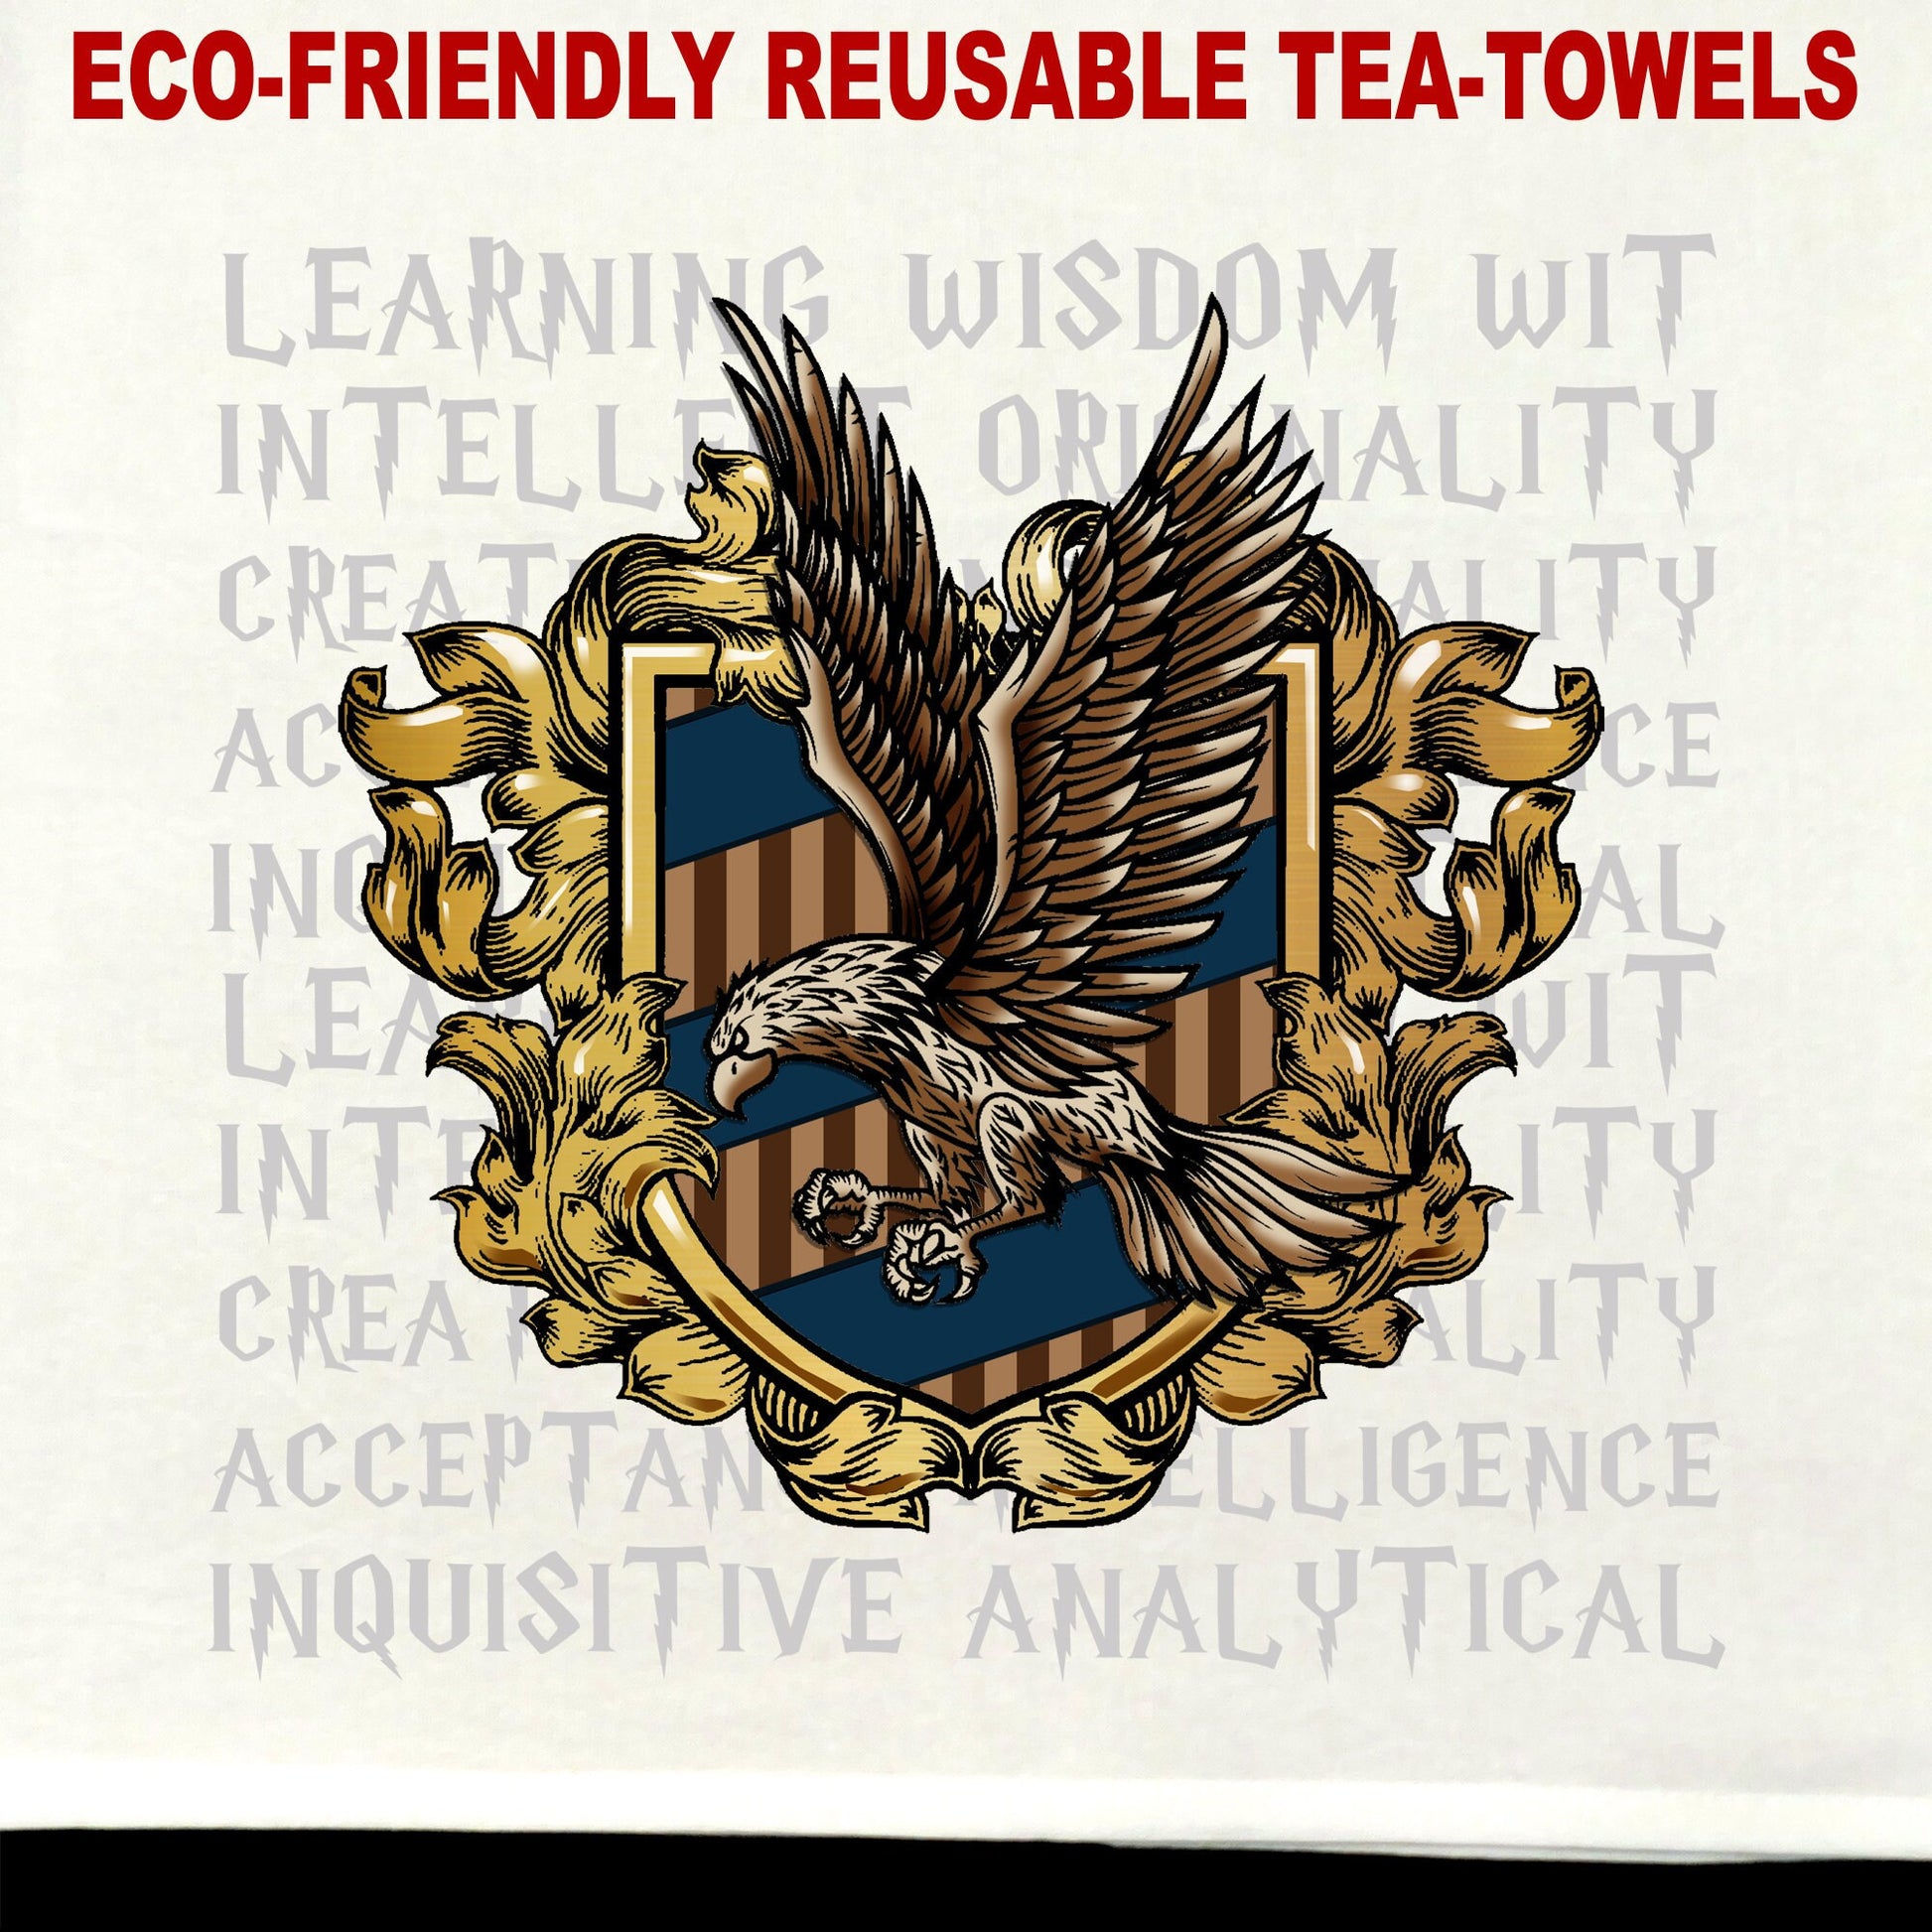 Eagle House Tea Towel / tea towel / dish towel / hand towel / reusable wipe / kitchen gift / kitchen deco